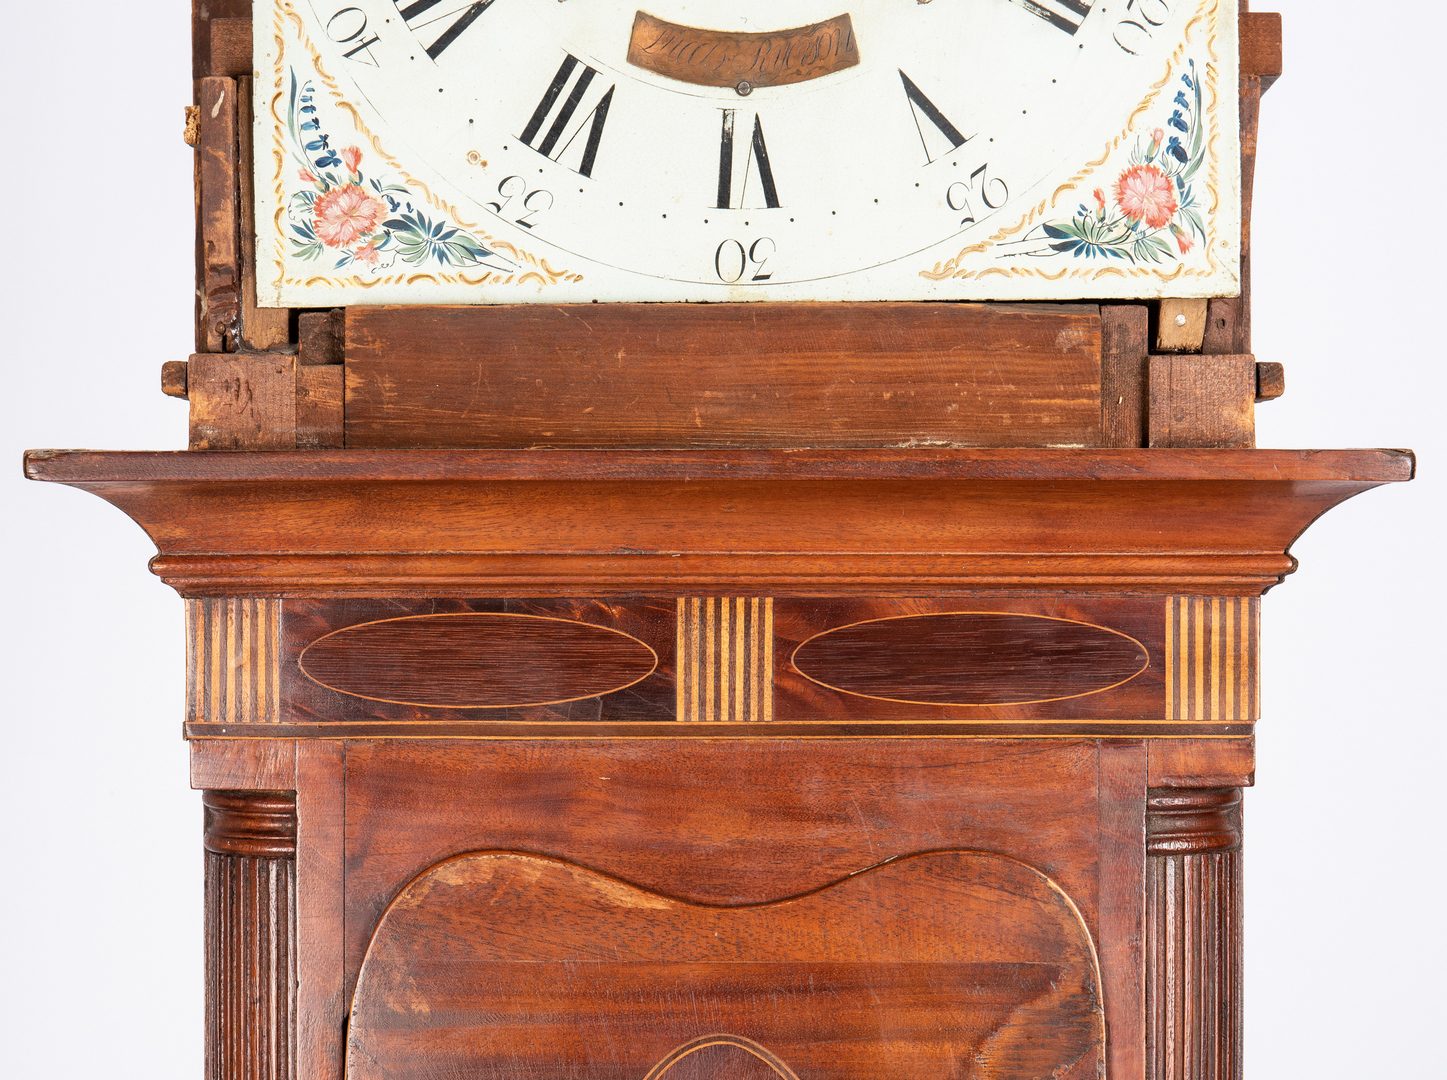 Lot 119: American Federal Tall Case Clock, Lucas Ryerson